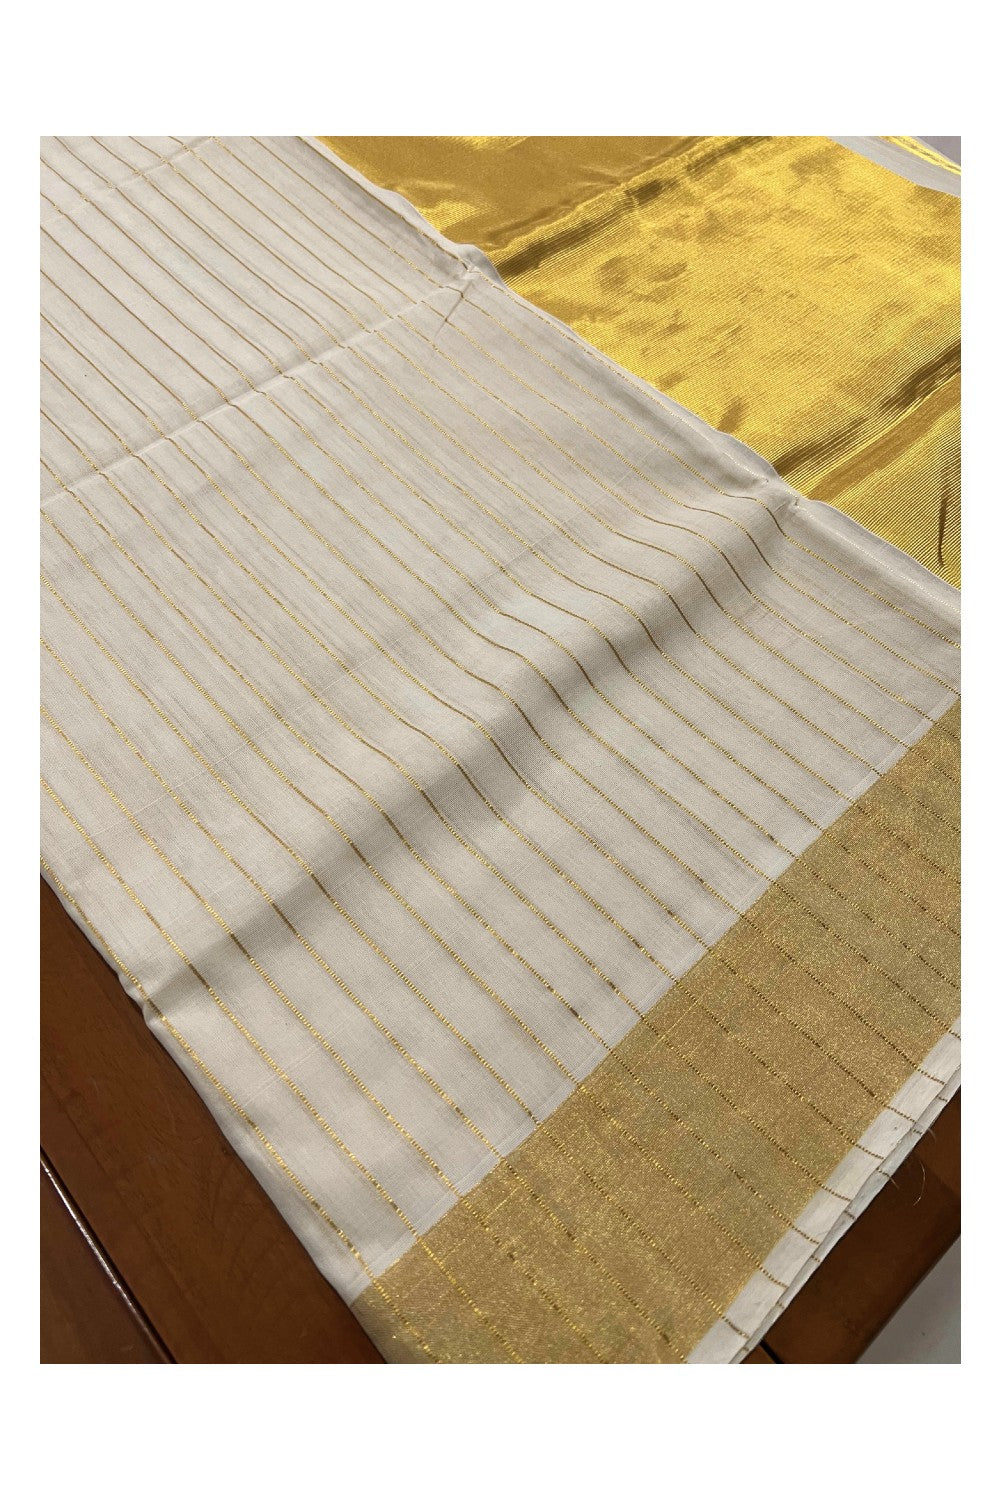 Southloom Premium Handloom Pure Cotton Stripes Work Saree with 10 inch Pallu